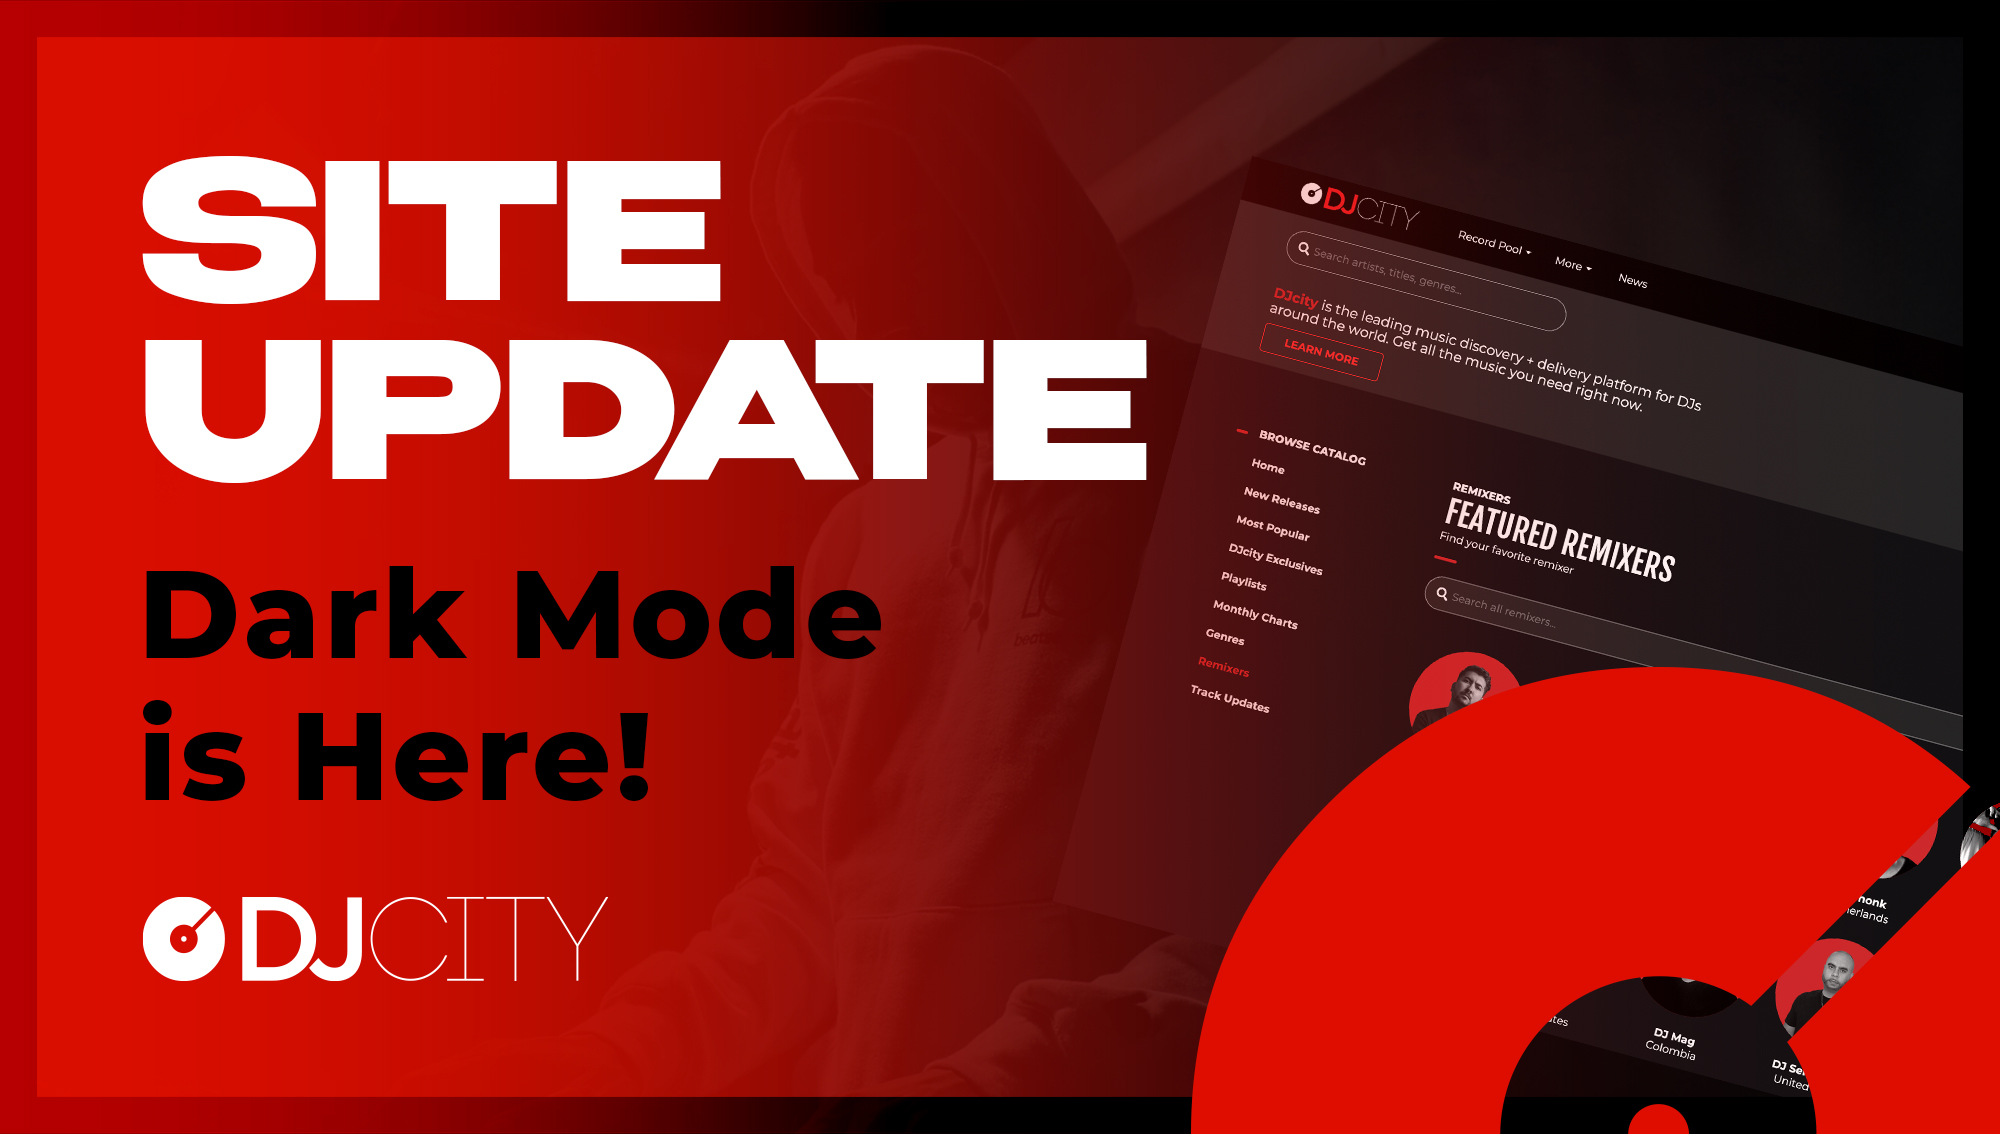 Website Update: DJcity Launches Dark Mode and New Remixers Page